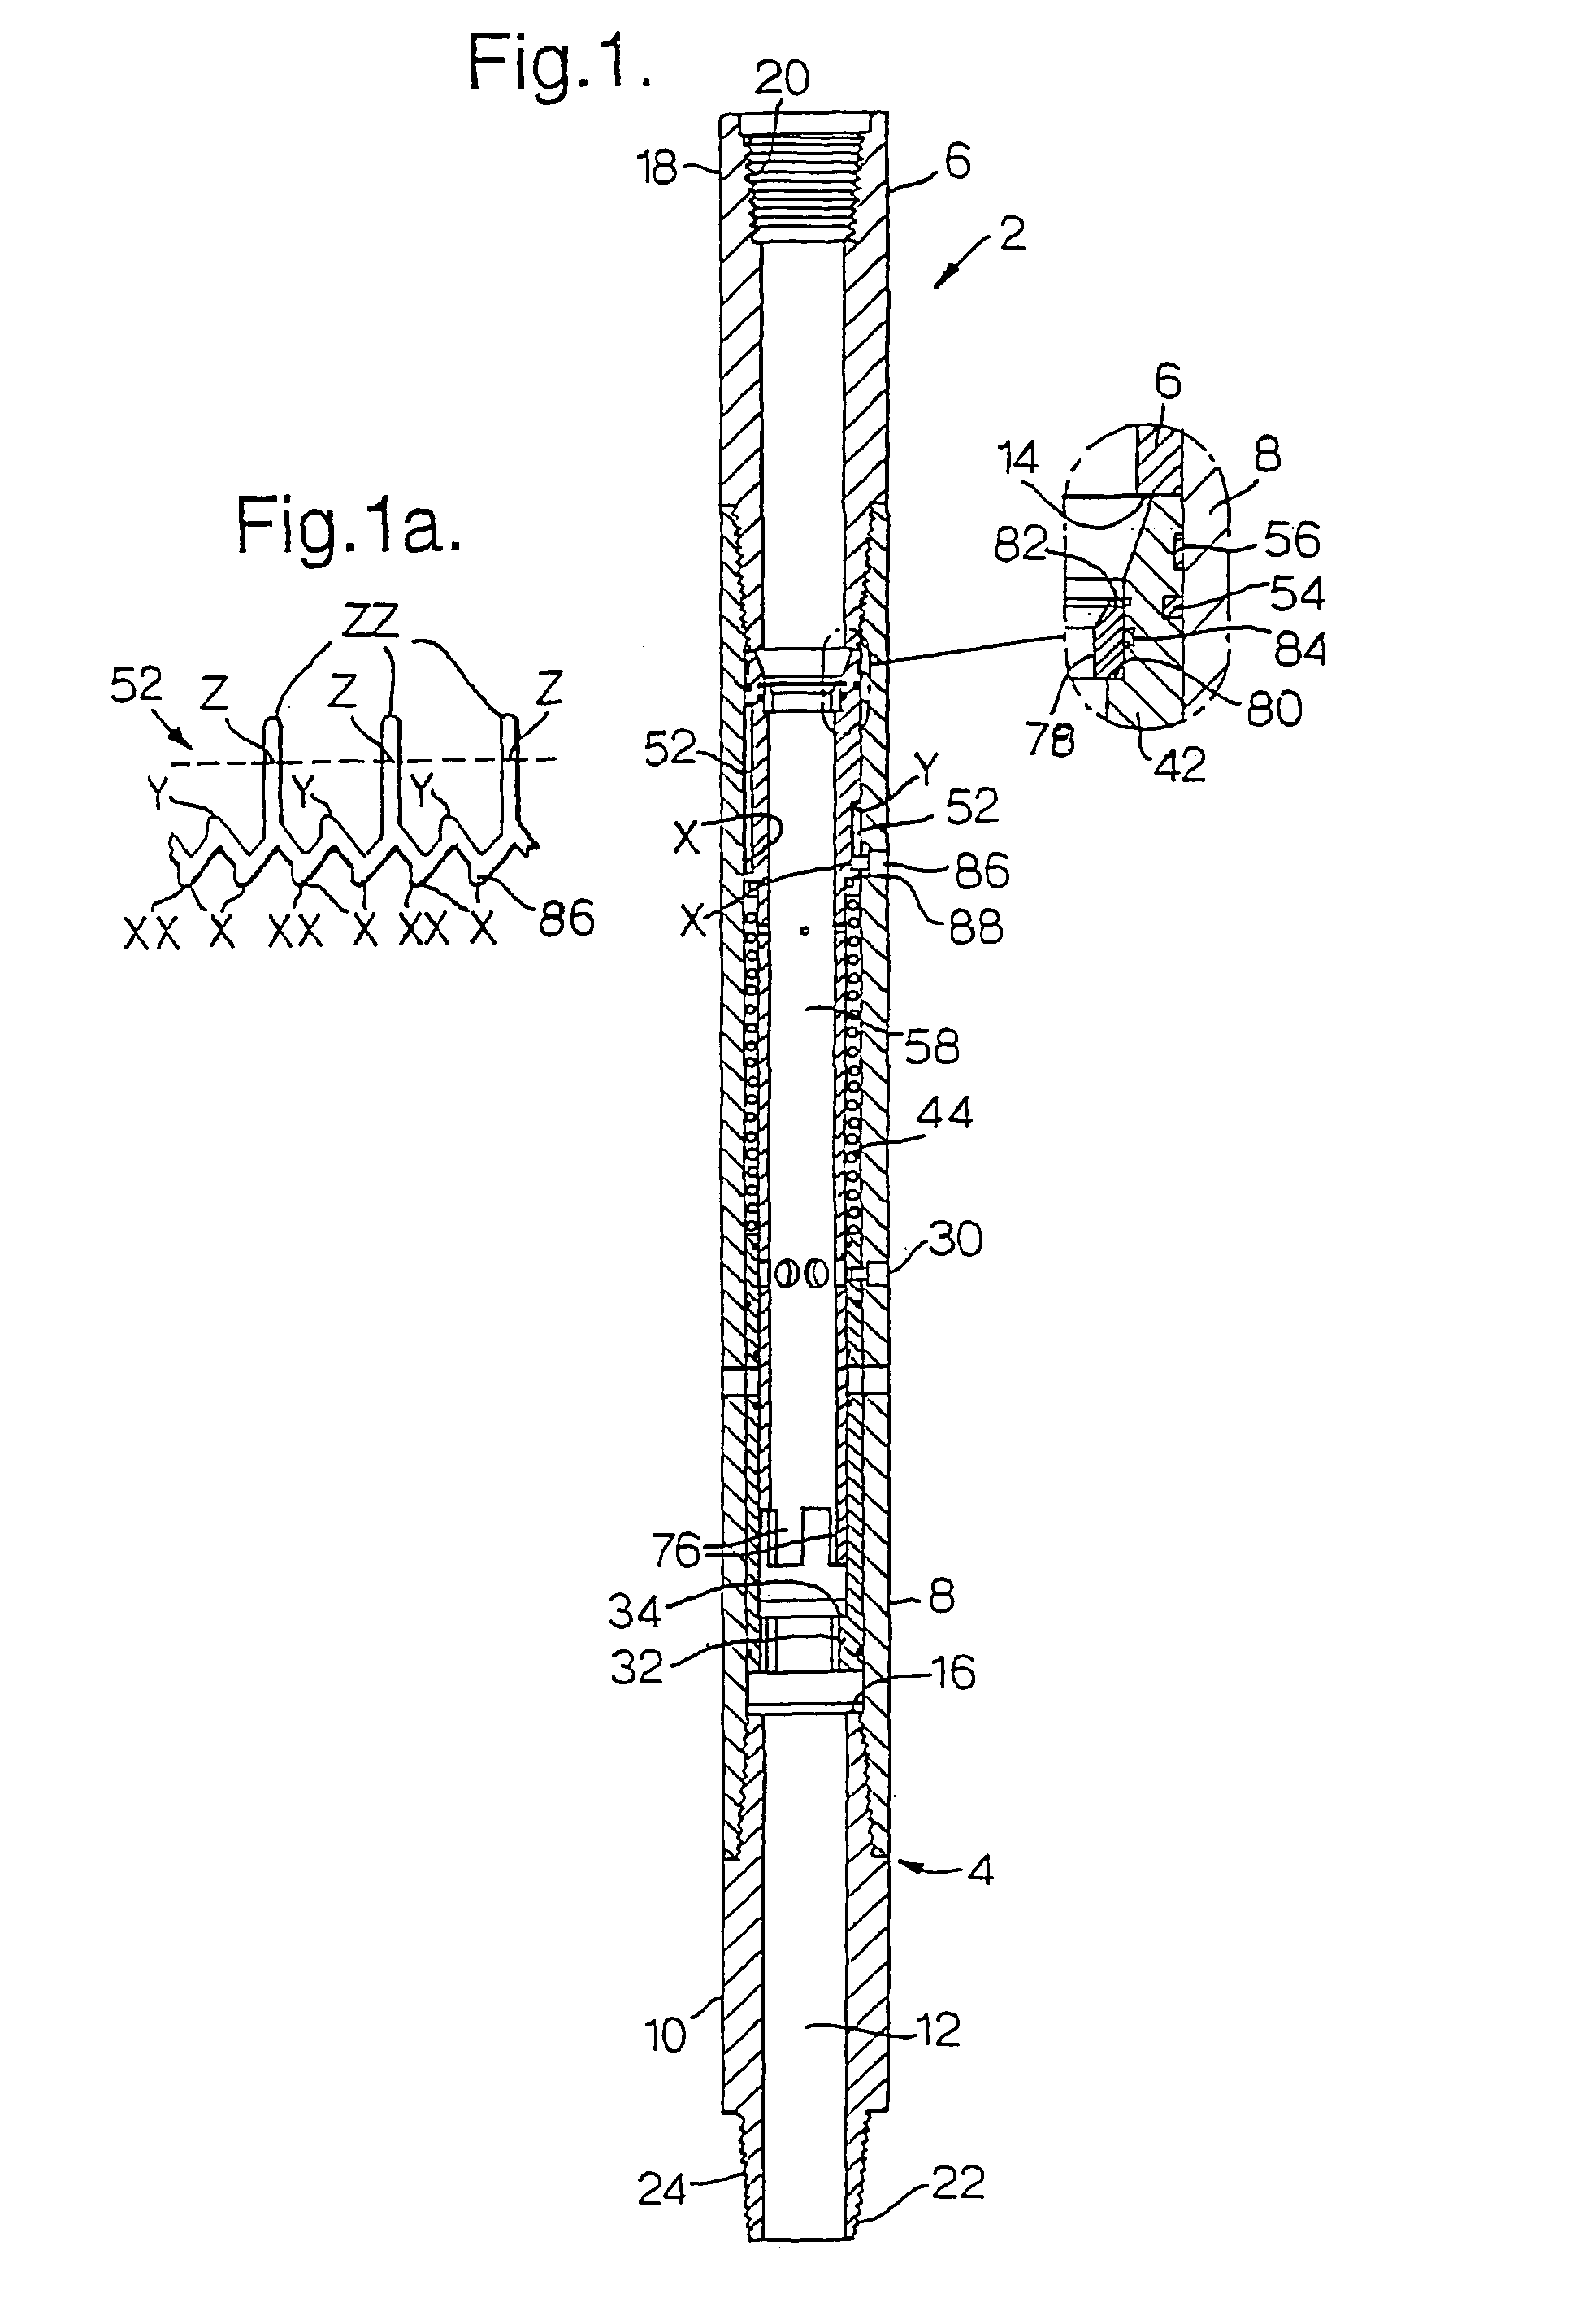 Multi-cycle downhole apparatus